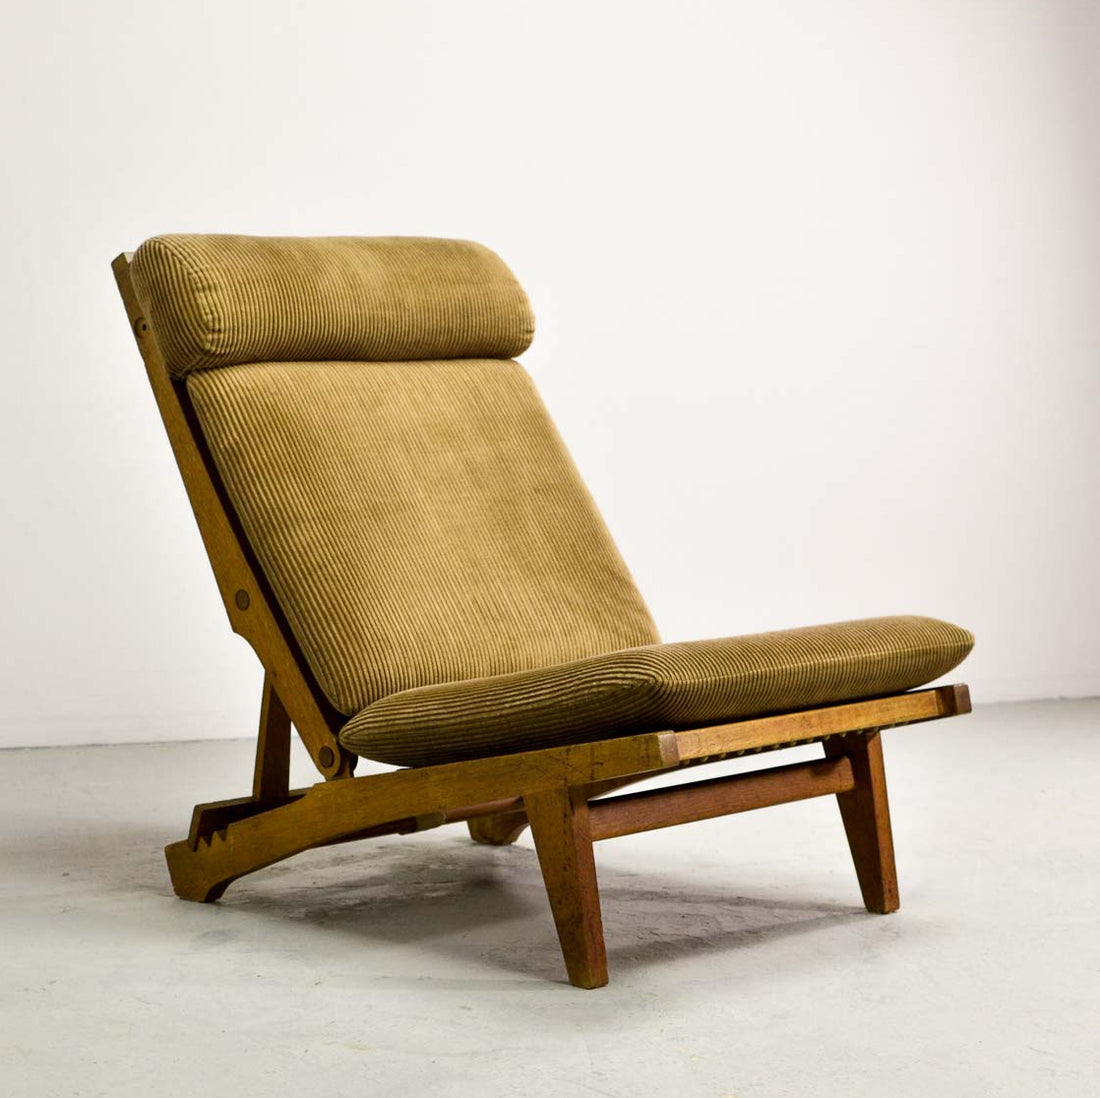 Mini Serie of 10 most Iconic Scandinavian designers & furnitures